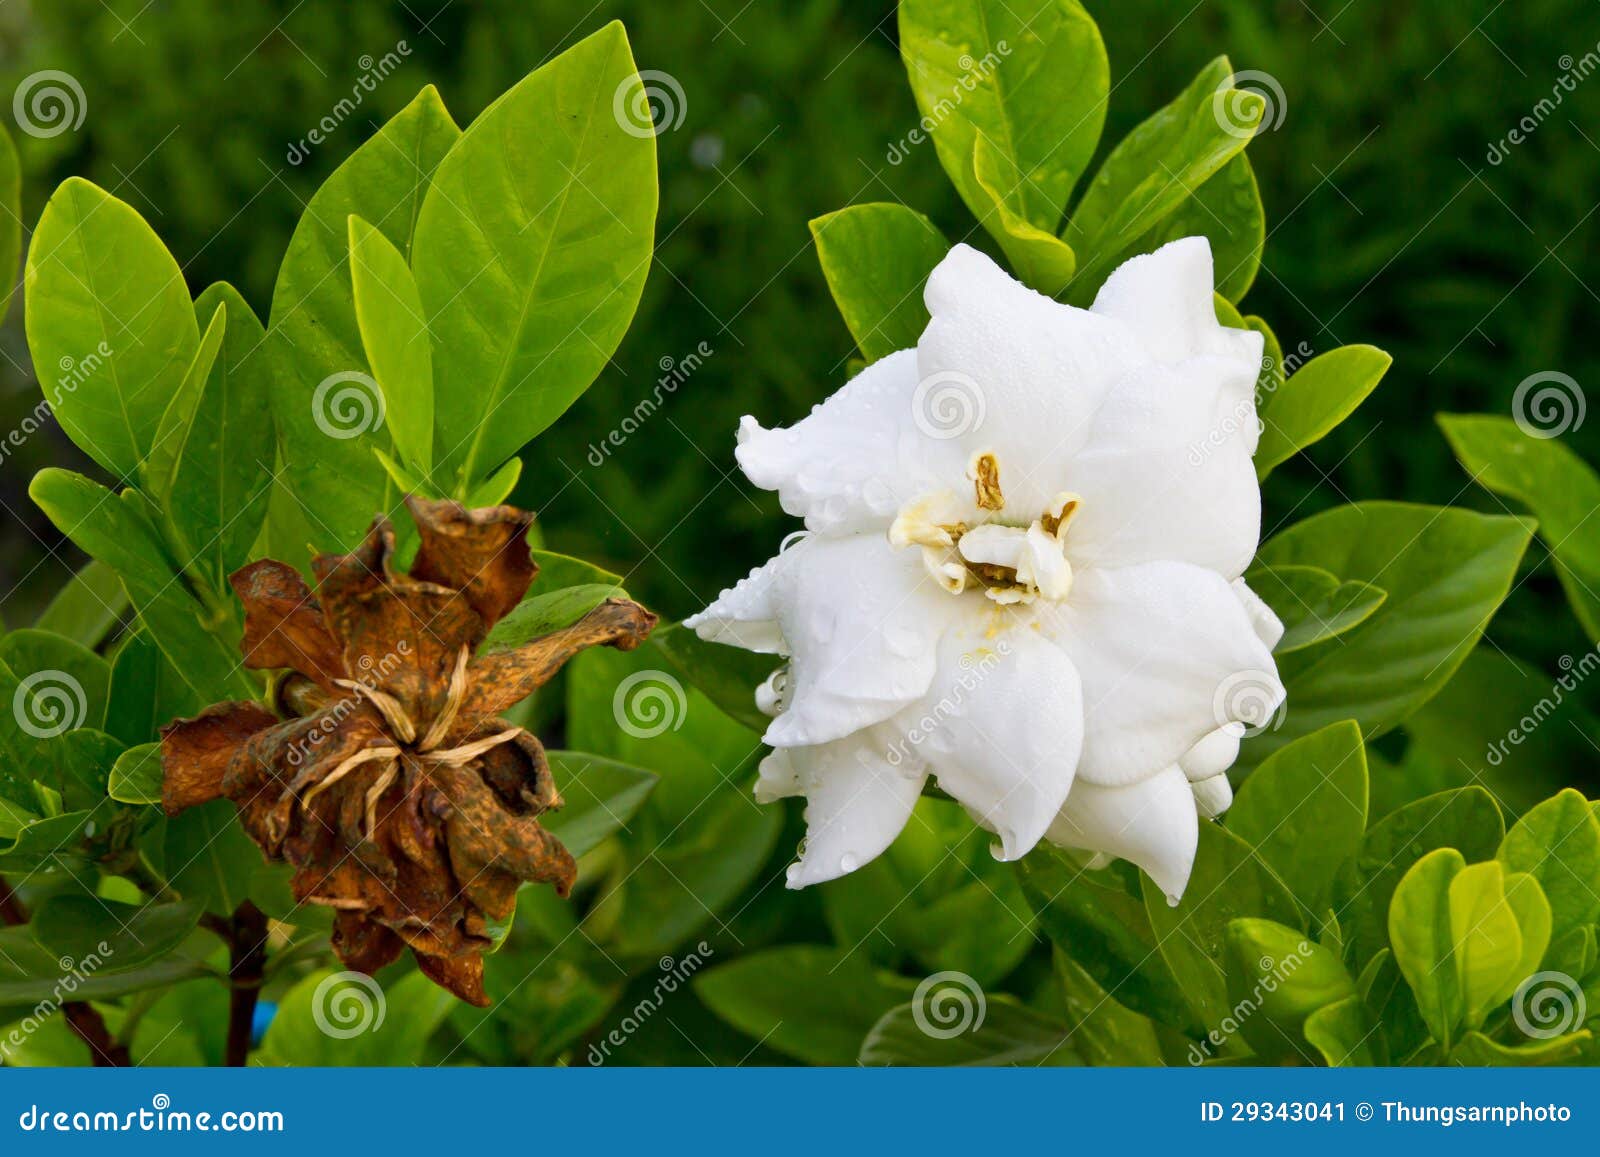 gardenia jasminoides flower